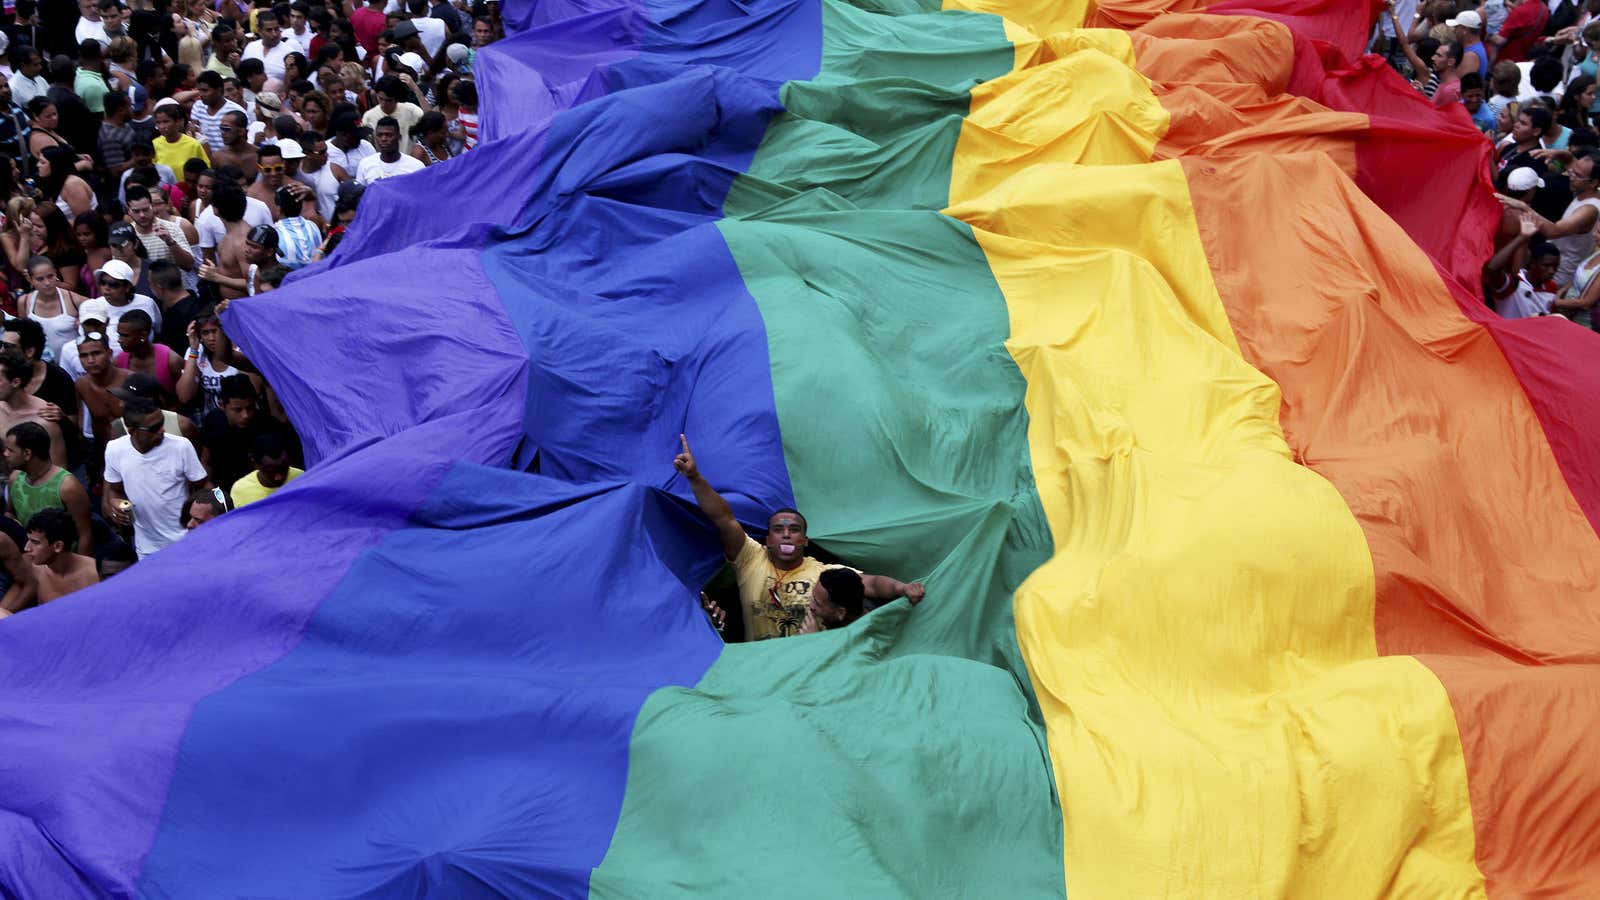 Rainbow games   (Reuters/Ana Carolina Fernandes)